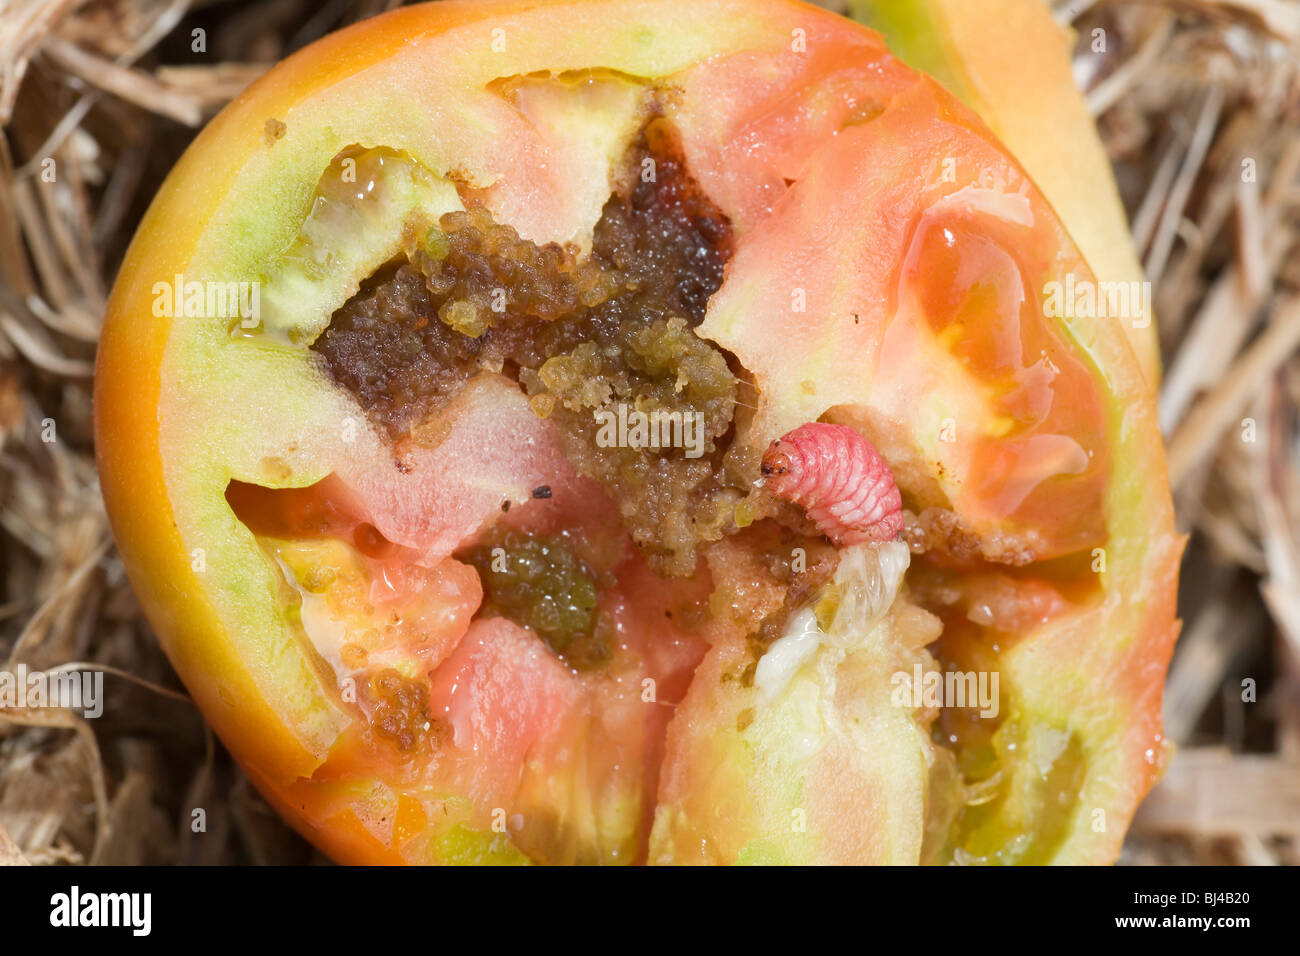 Tomatoe / tomato Helios species fruitworm destroying the inside of a perfectly good tomato / tomatoe Stock Photo